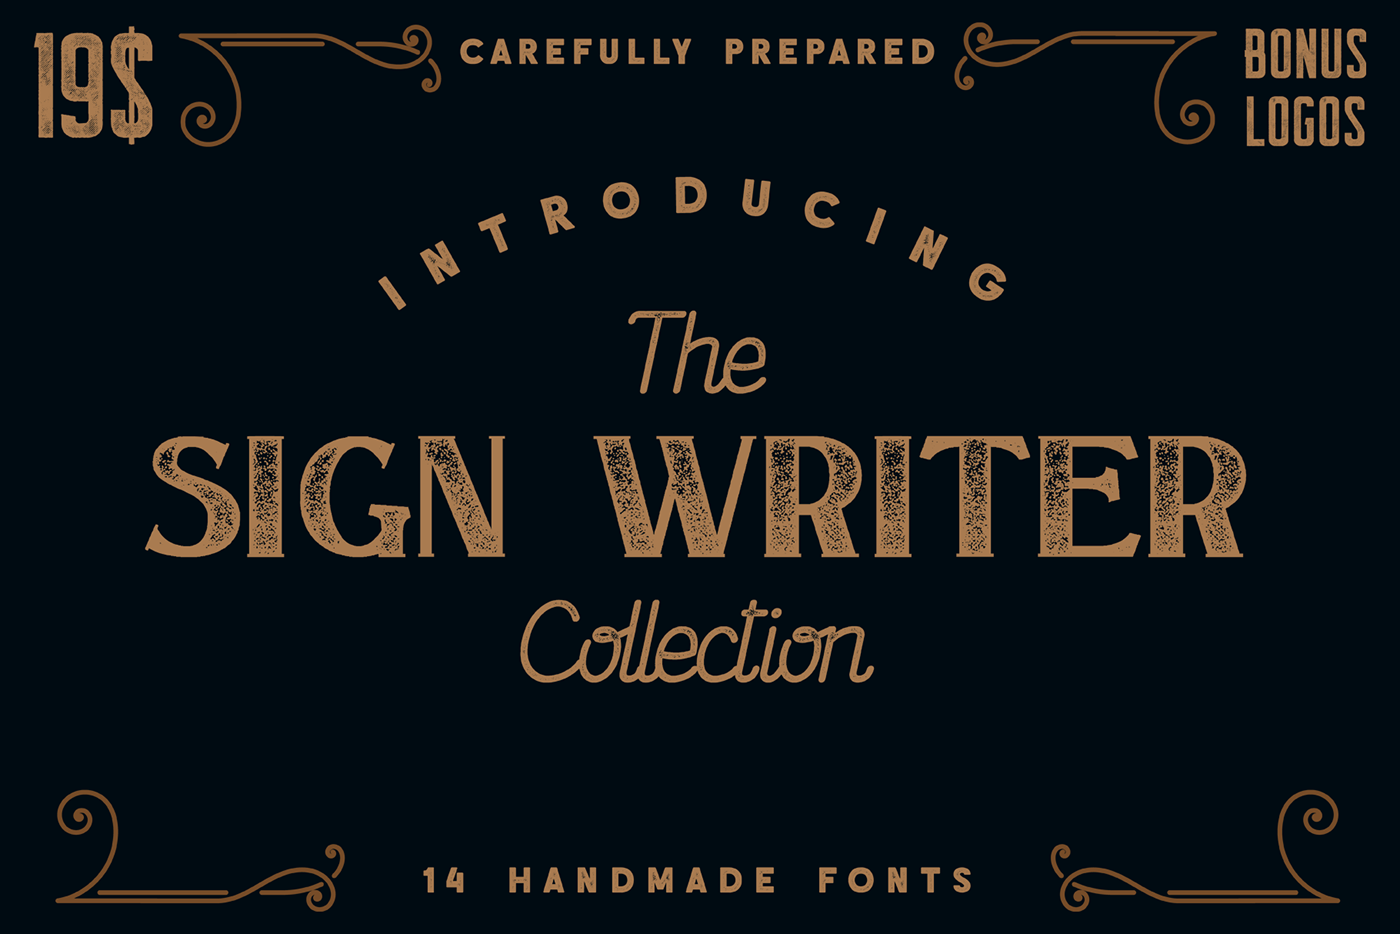 Шрифт novelist. Write fonts. Signs of writing. Write sign. Prepare carefully